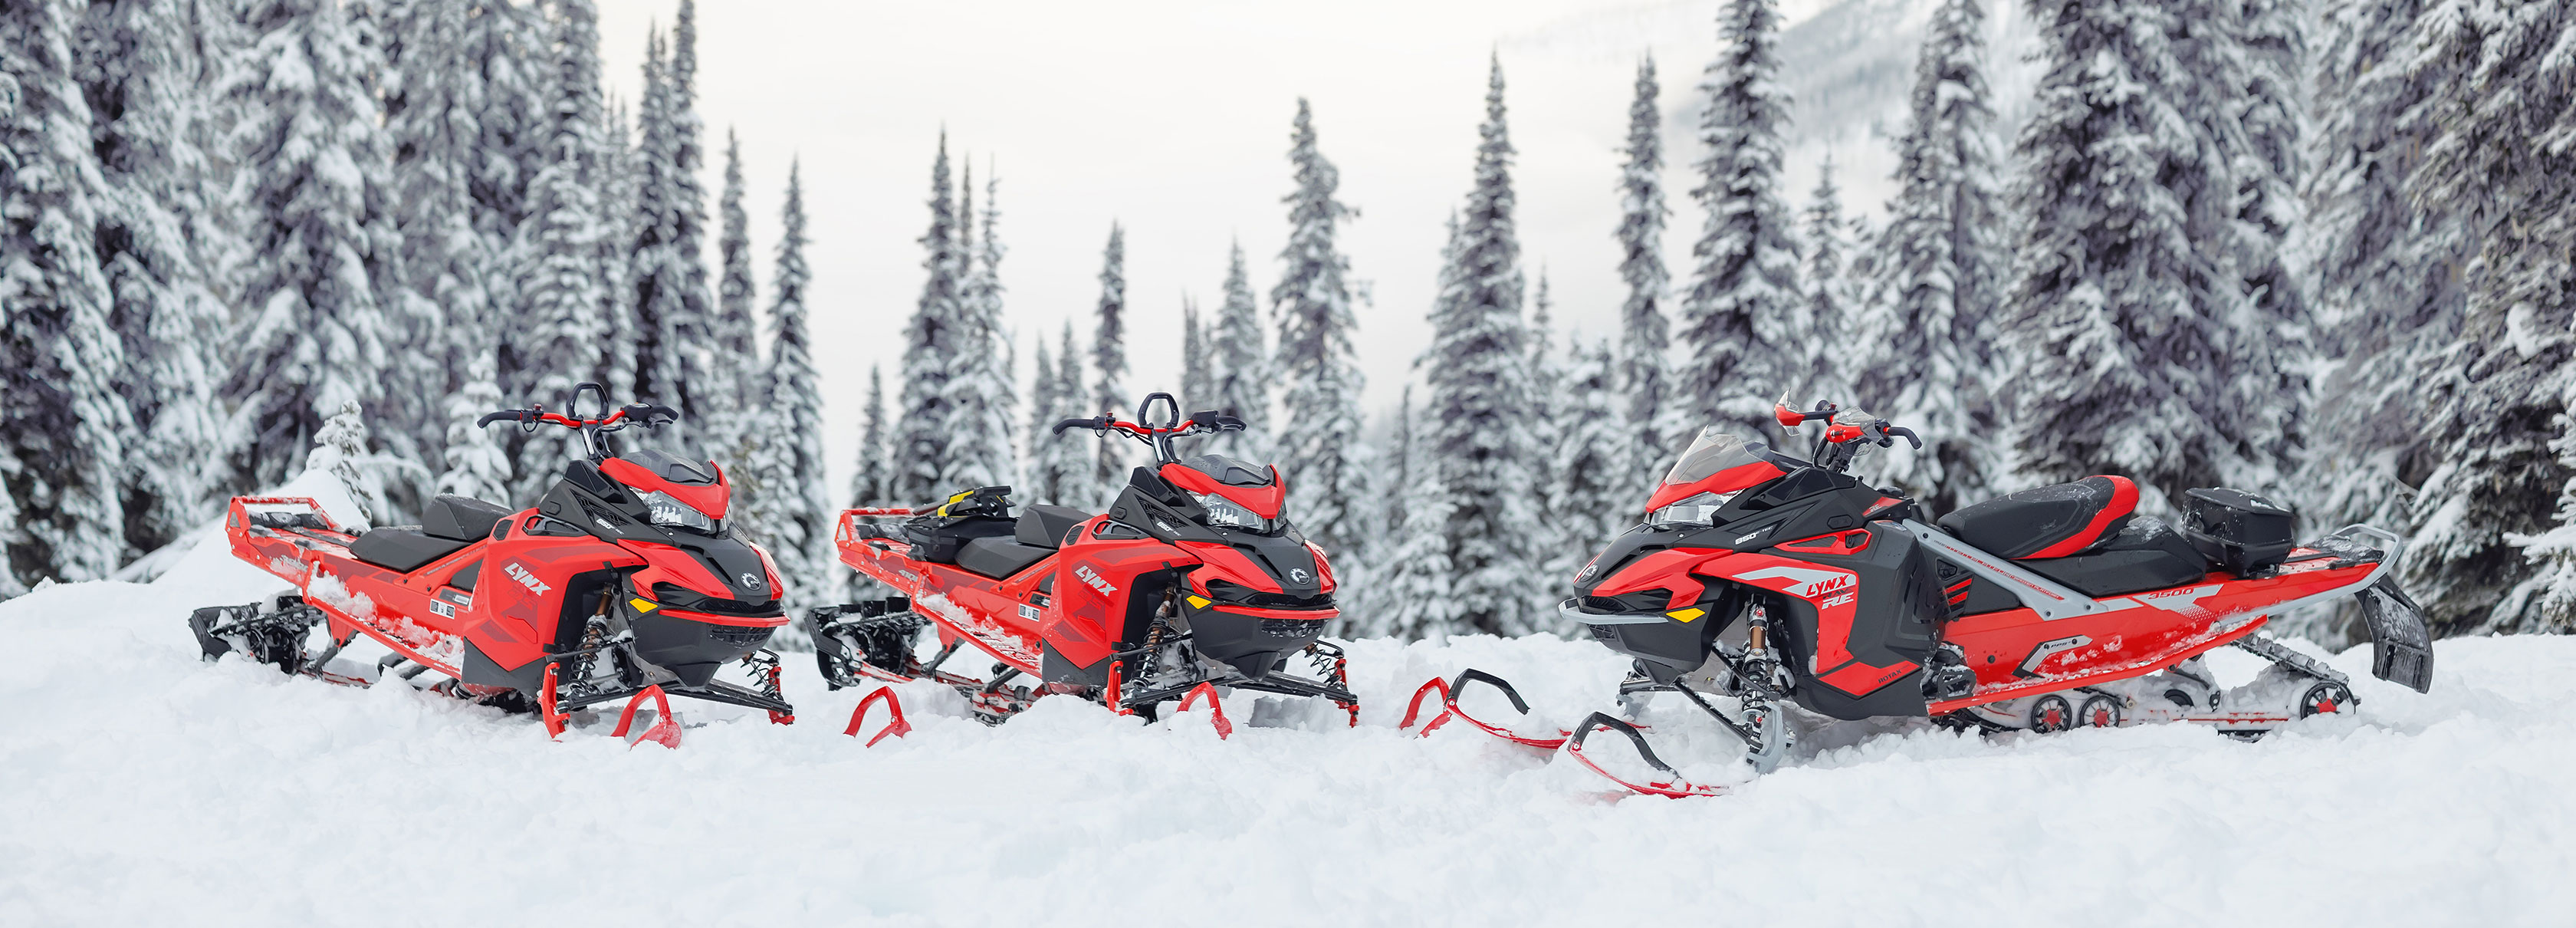 Lynx snowmobiles in snowy forest